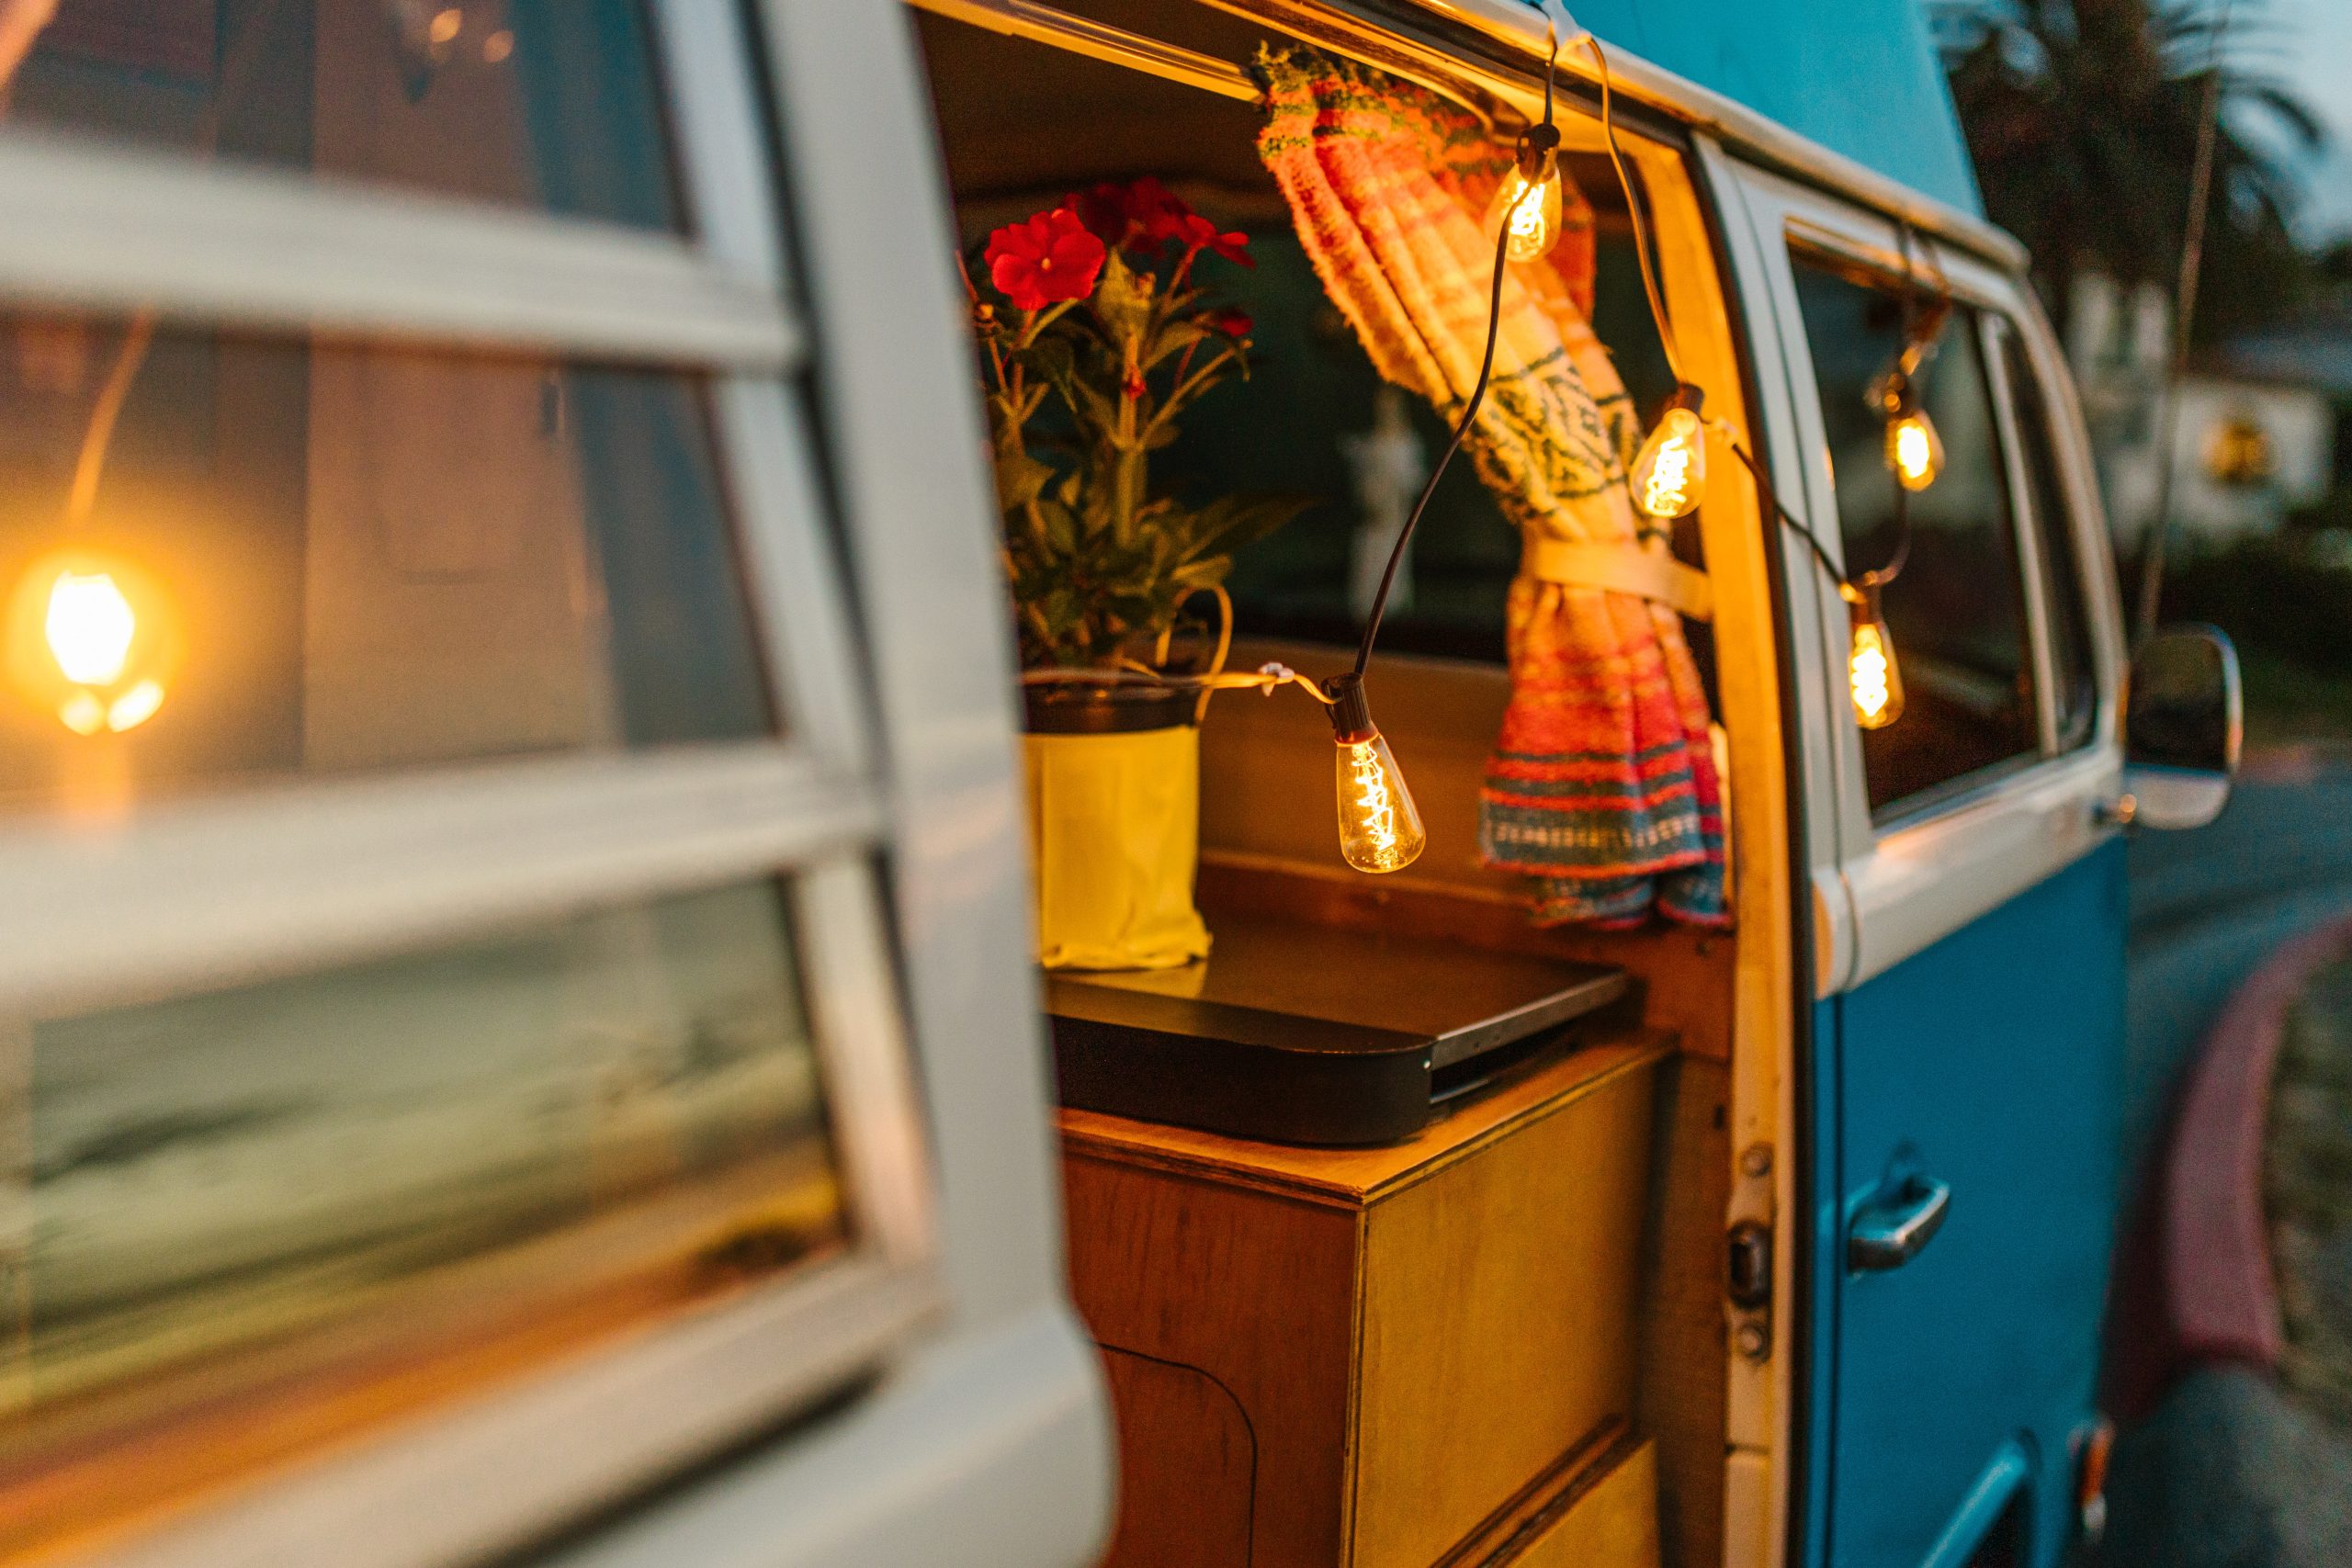 Choosing a Mini Camper Van – Big Adventures with Little Space